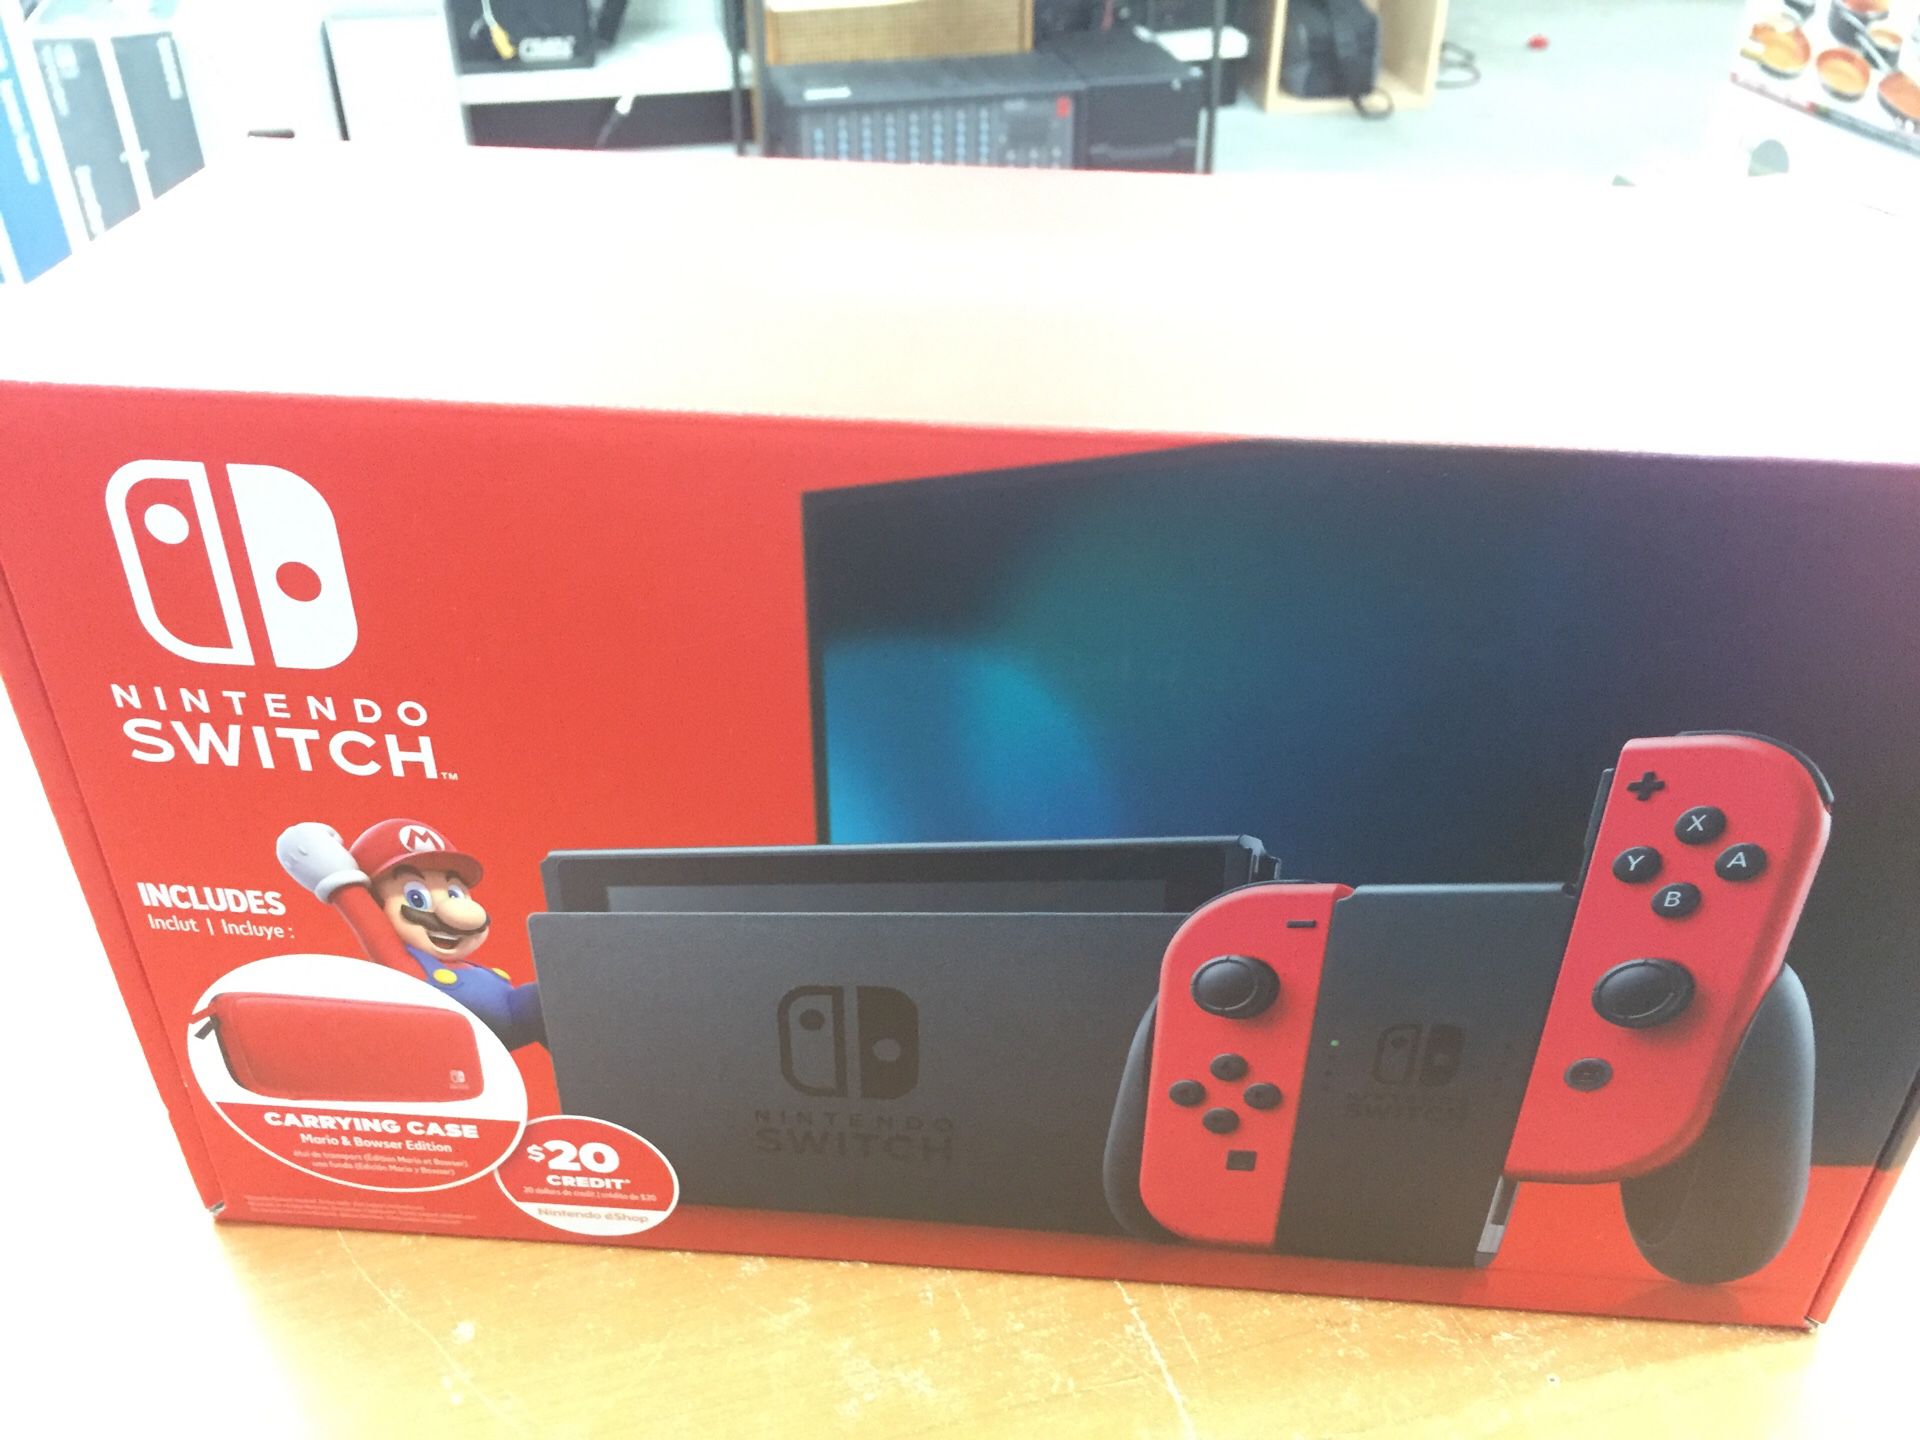 Nintendo Switch Bundle with Mario Red Joy-Con,Carring Case